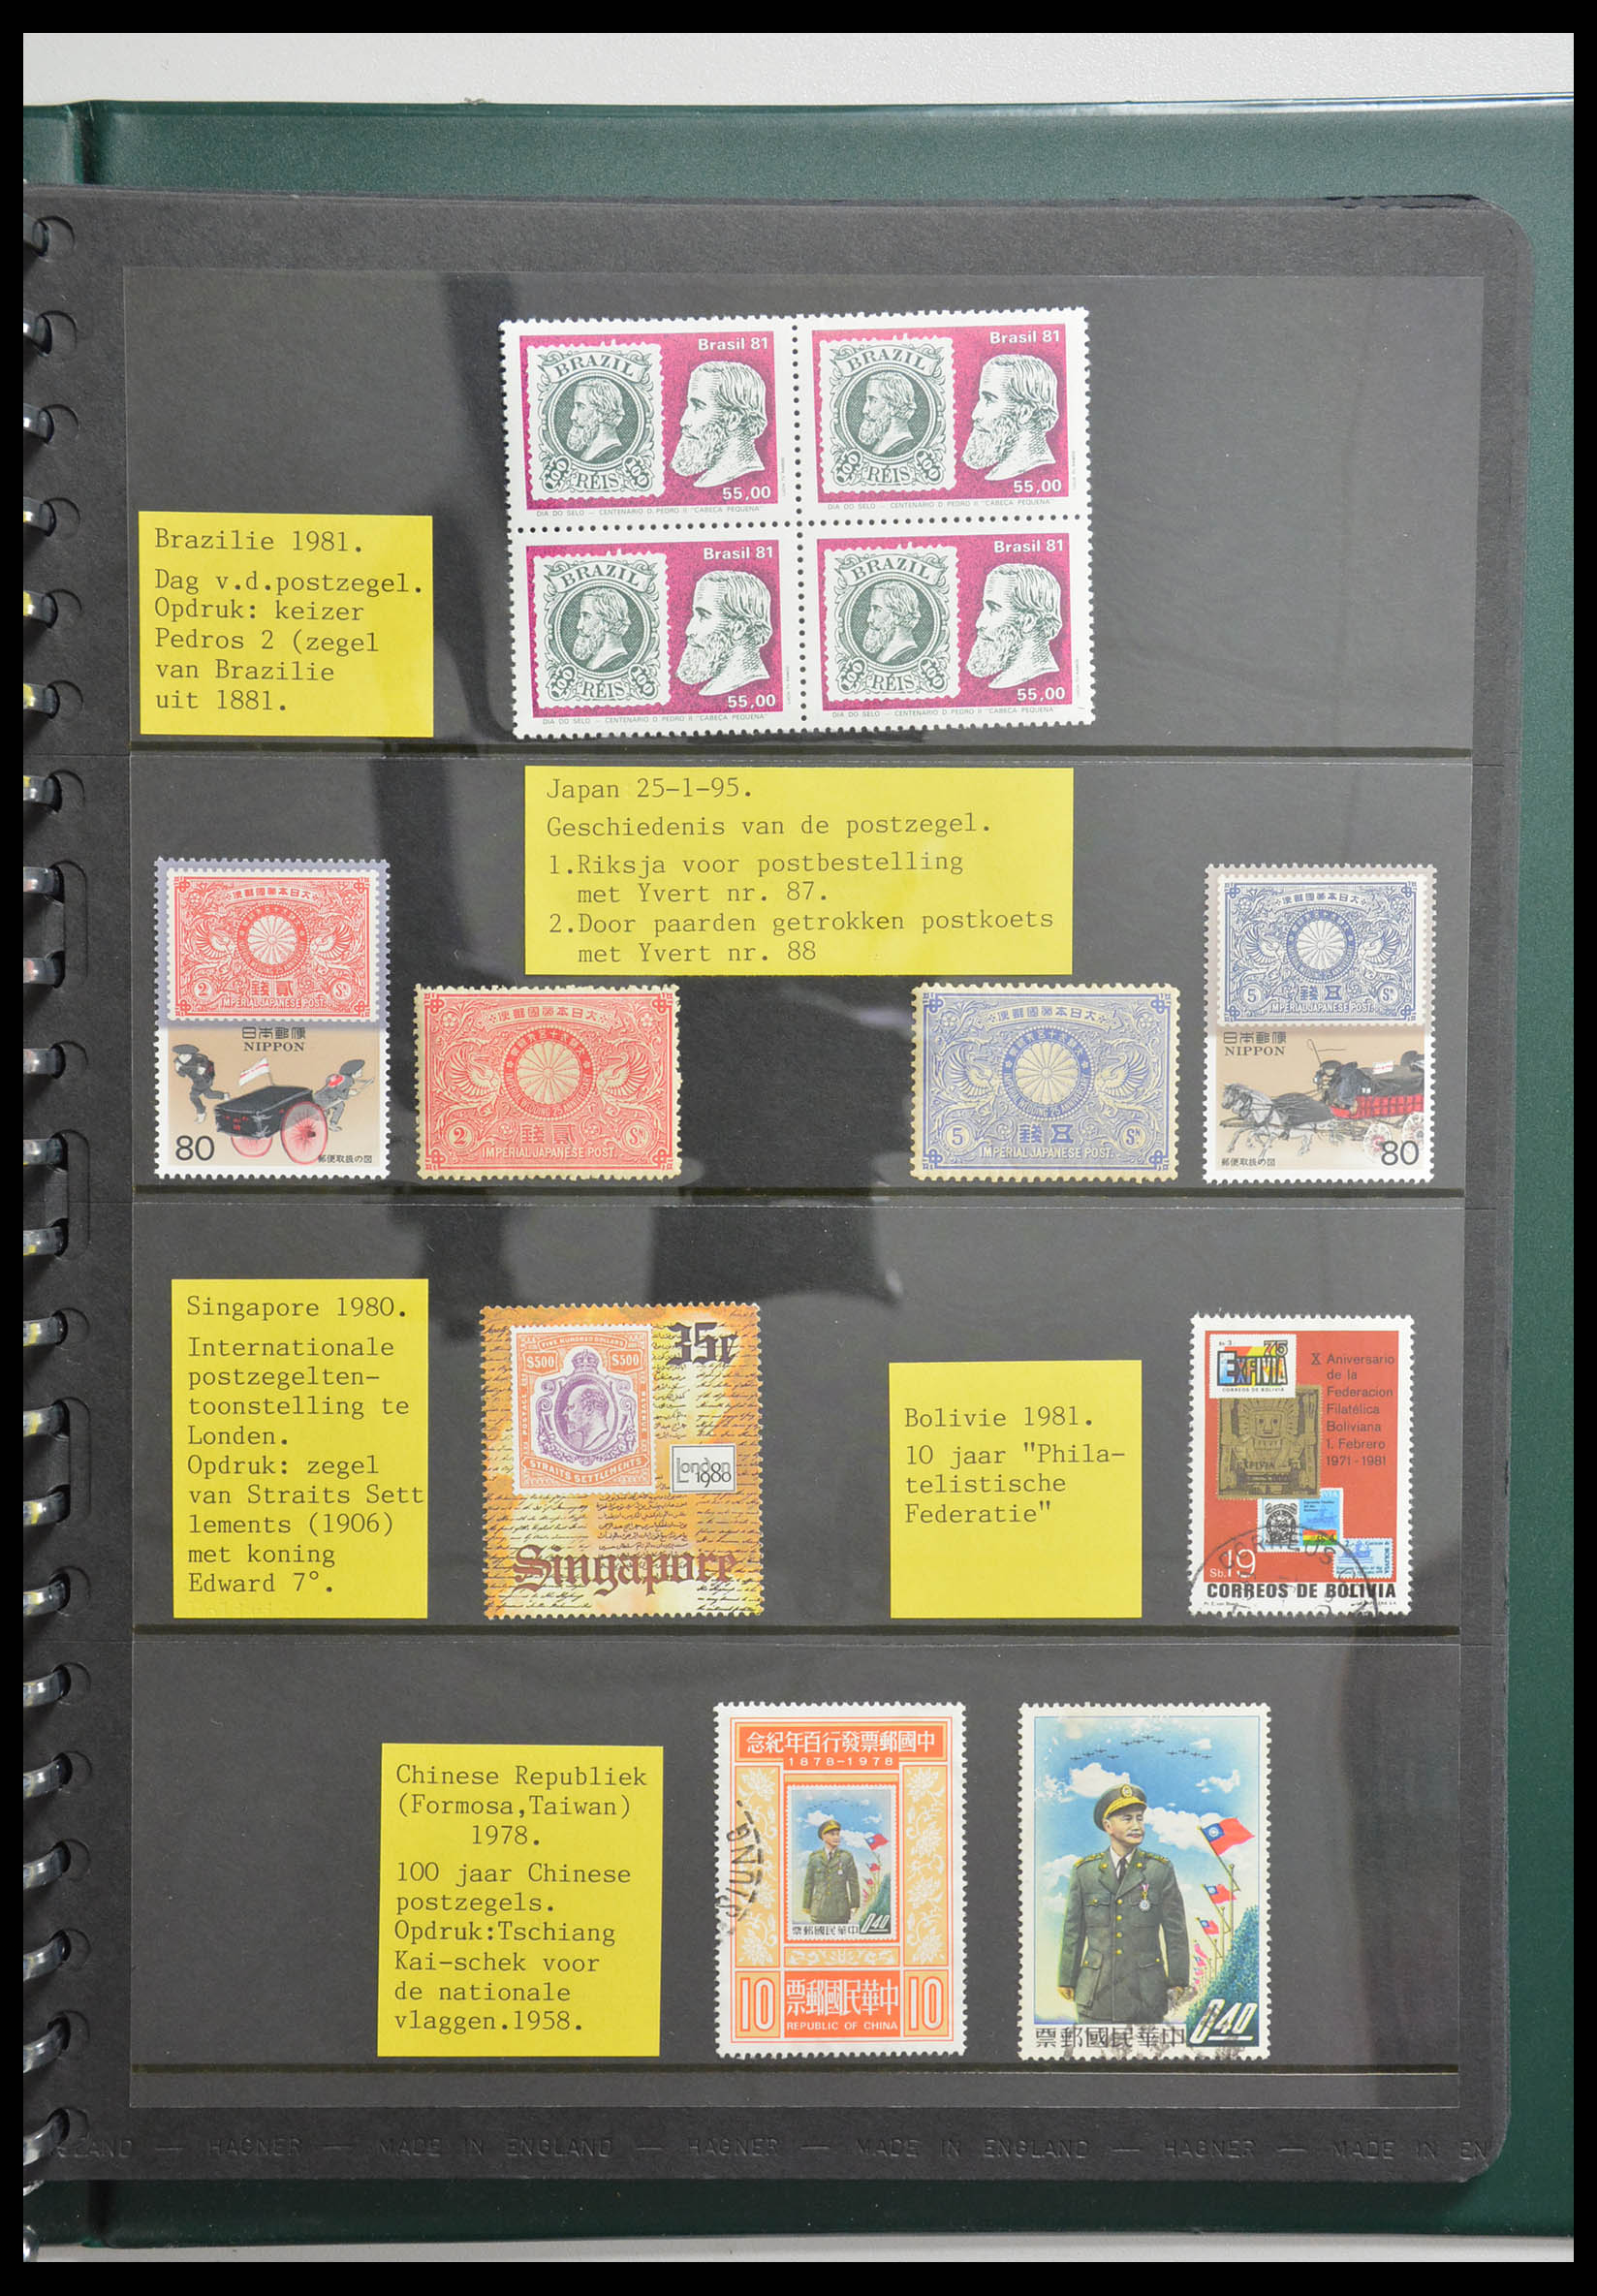 28337 124 - 28337 Postzegel op postzegel 1840-2001.